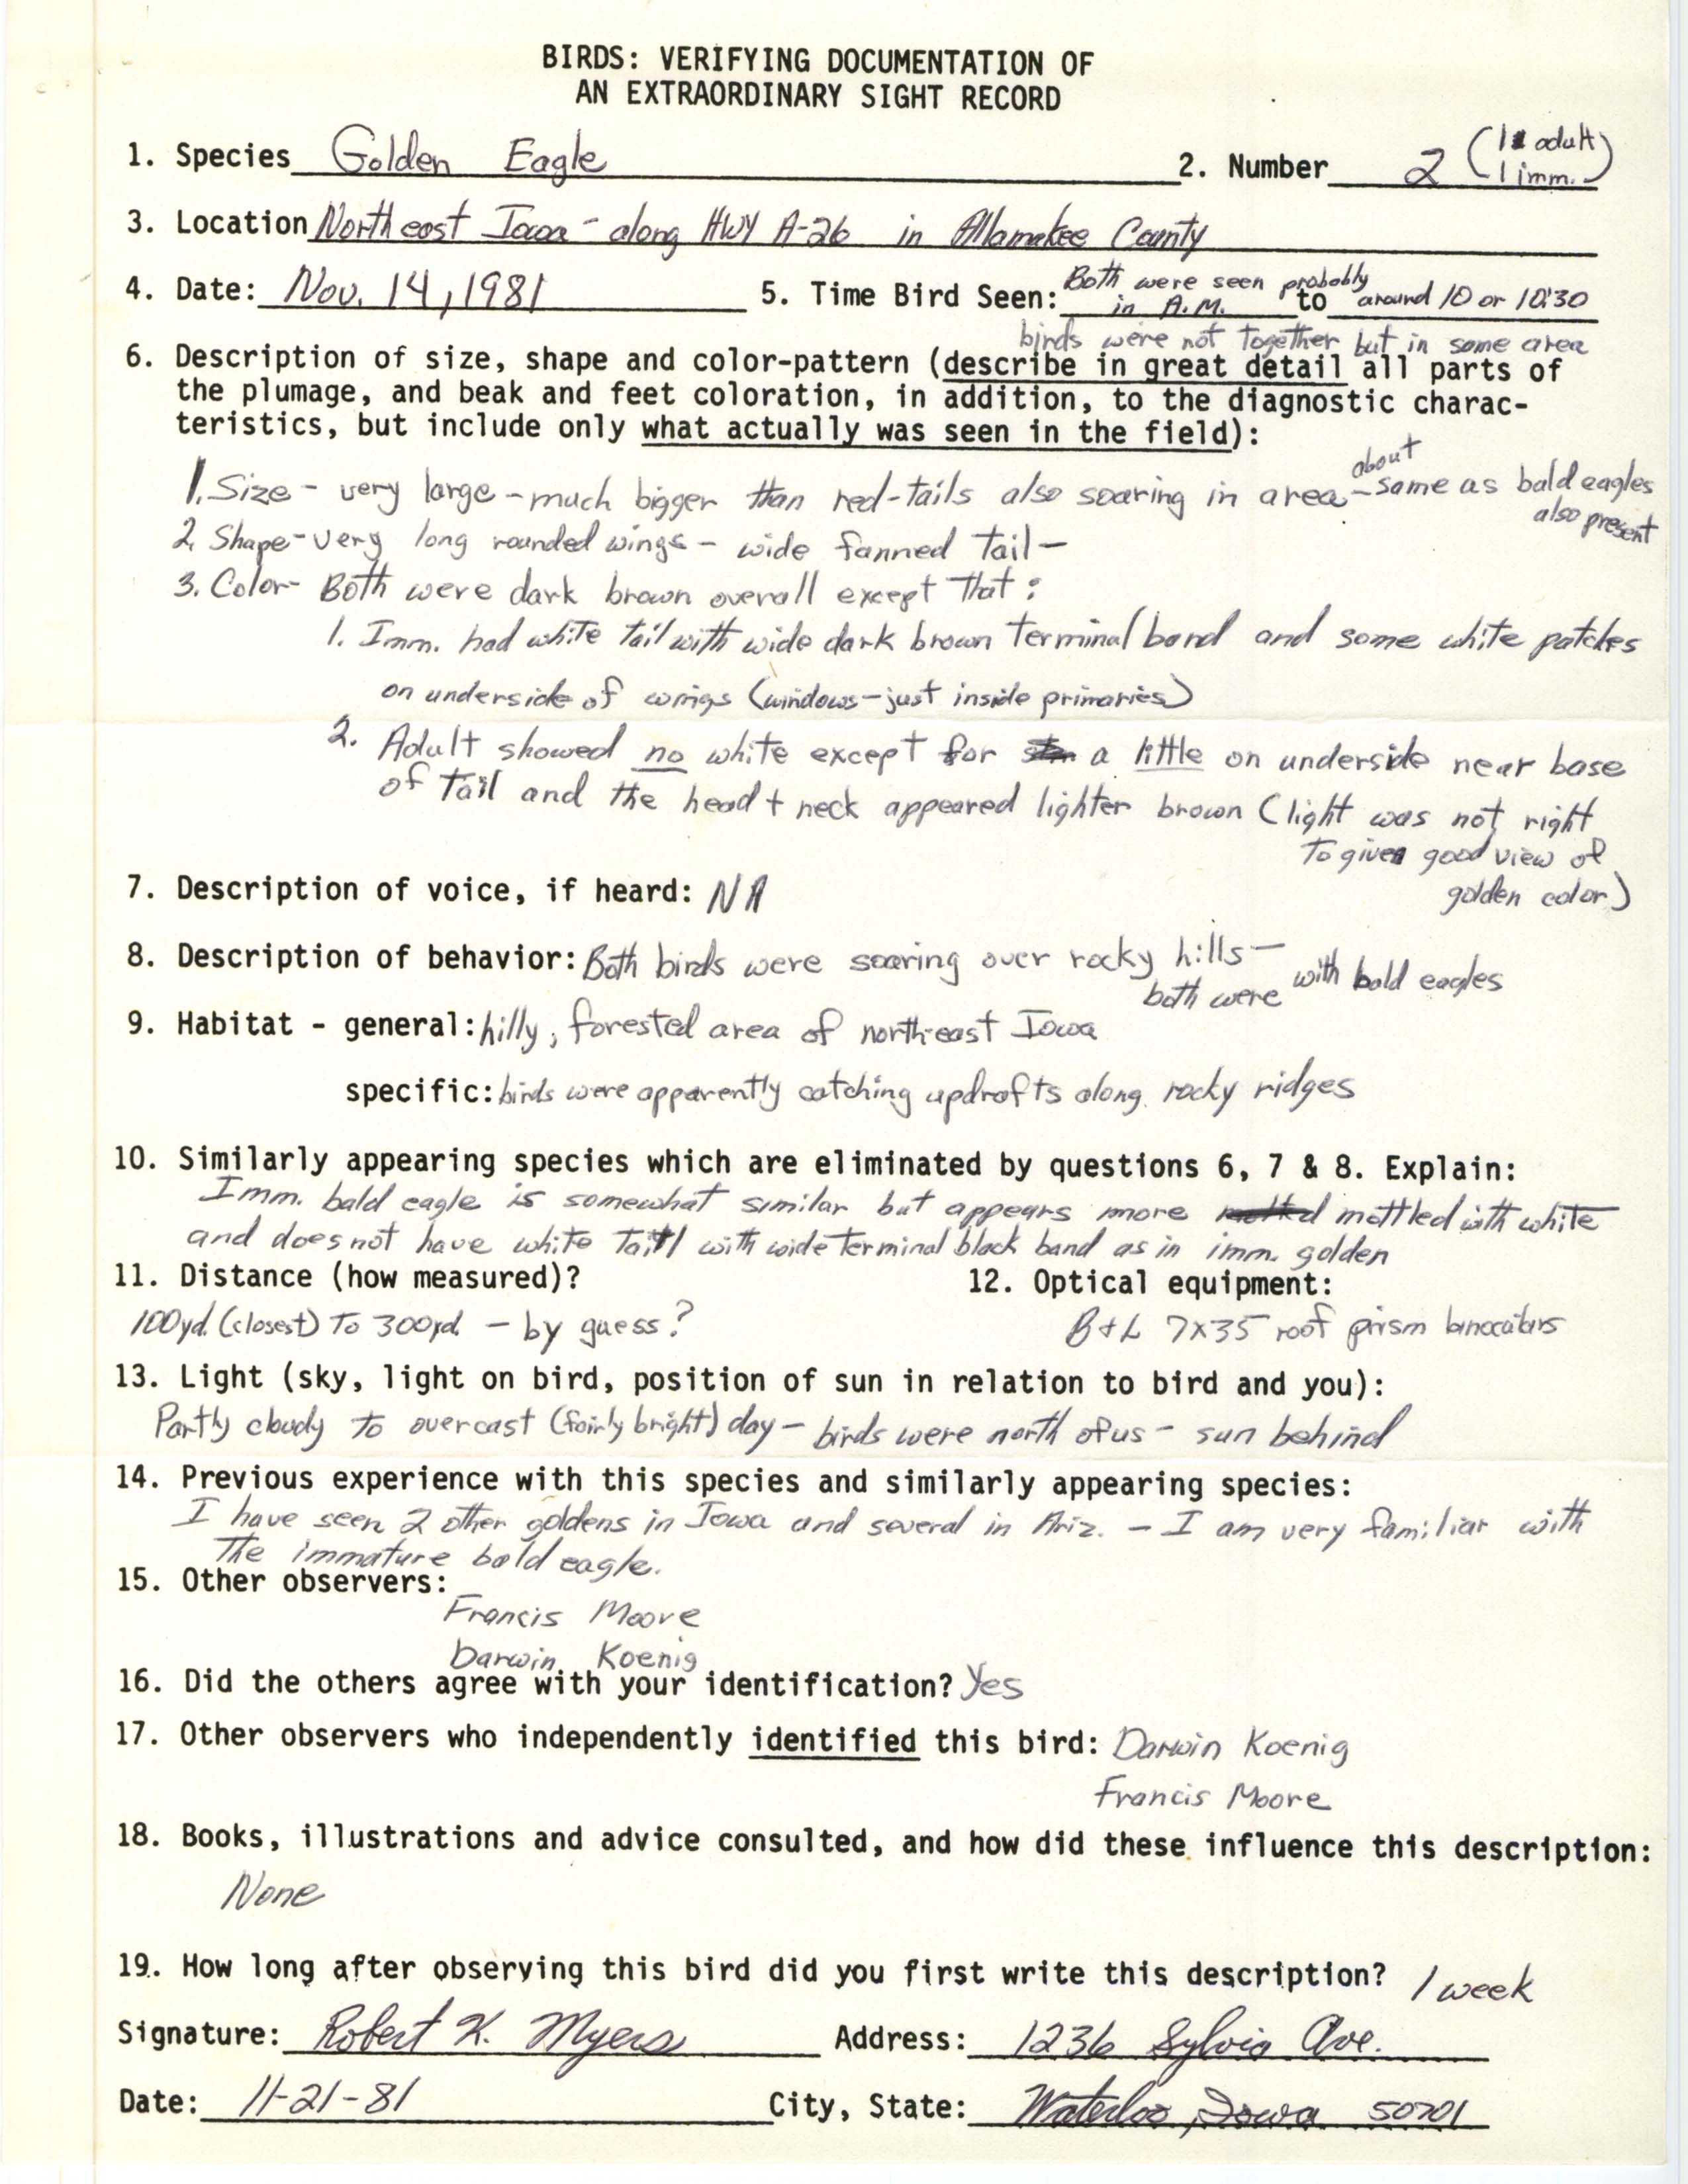 Rare bird documentation form for Golden Eagle at Allamakee County, 1981